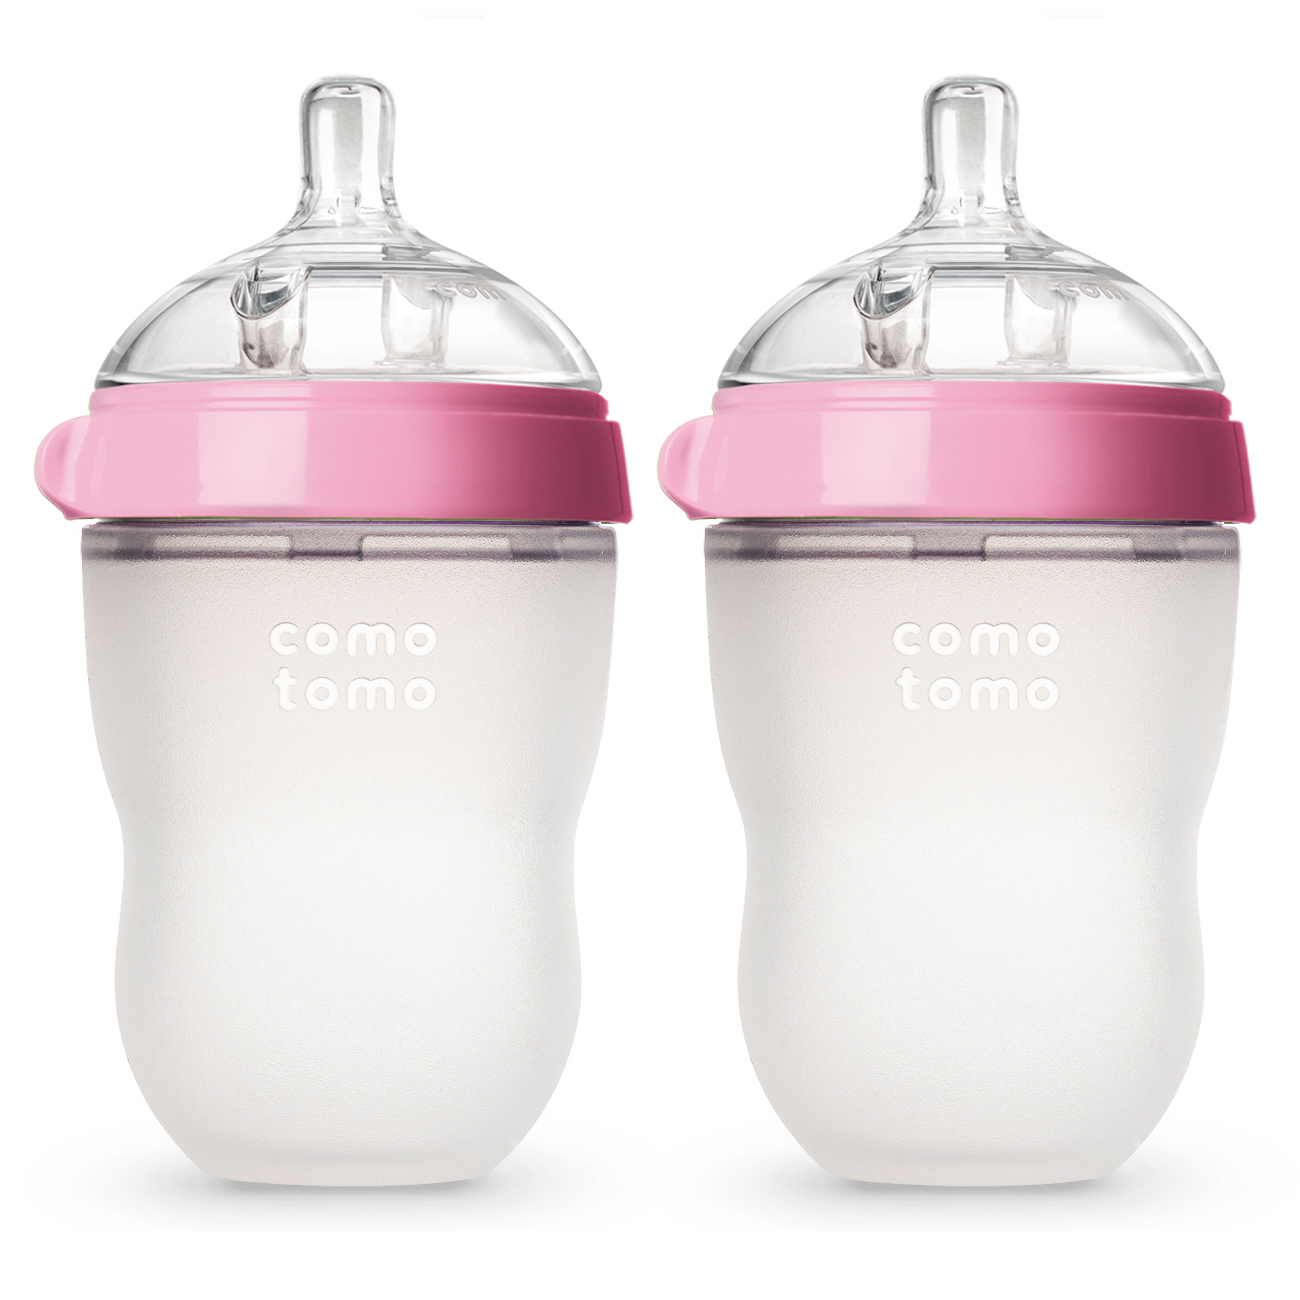 Comotomo 奶瓶, 两个装k, 8 oz Pink - Walmart.com